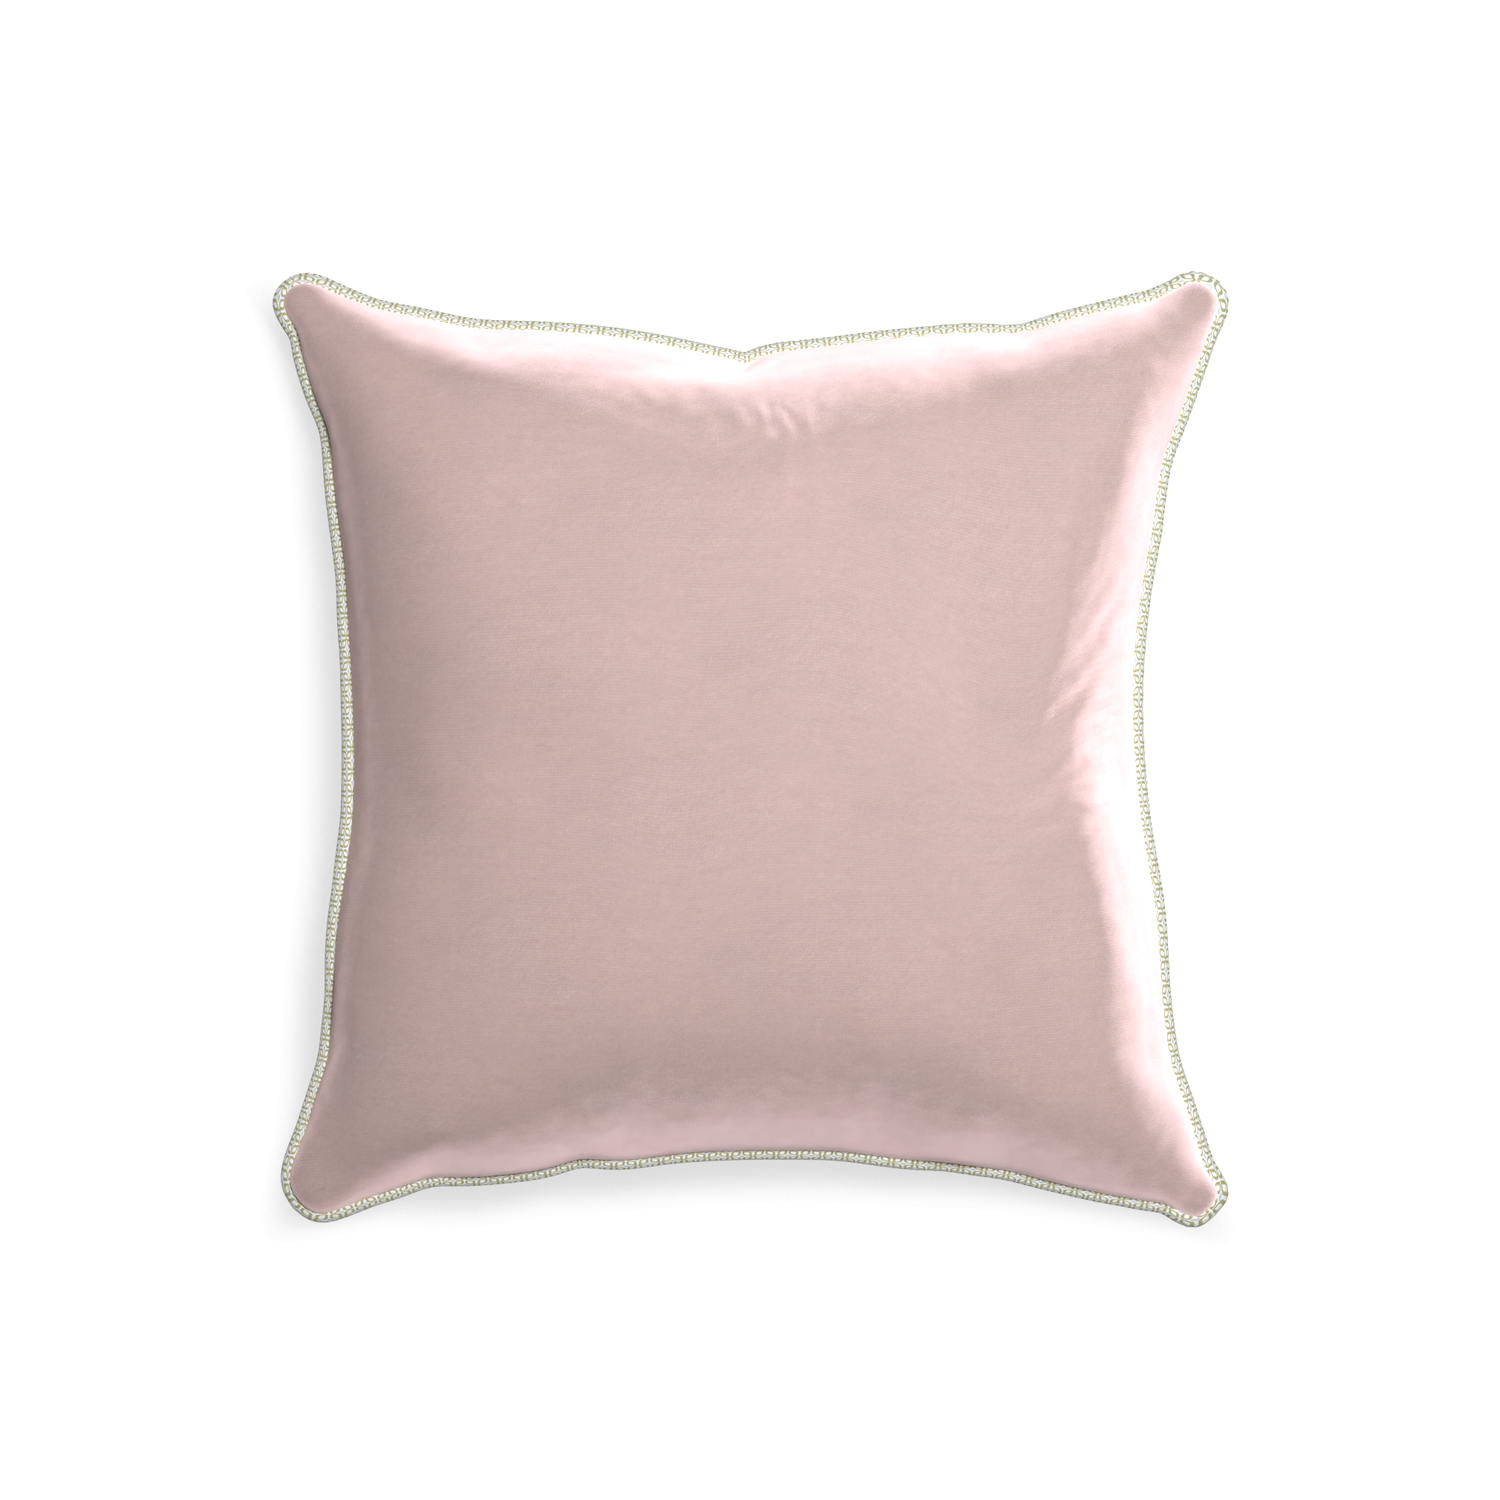 20-square rose velvet custom pillow with l piping on white background